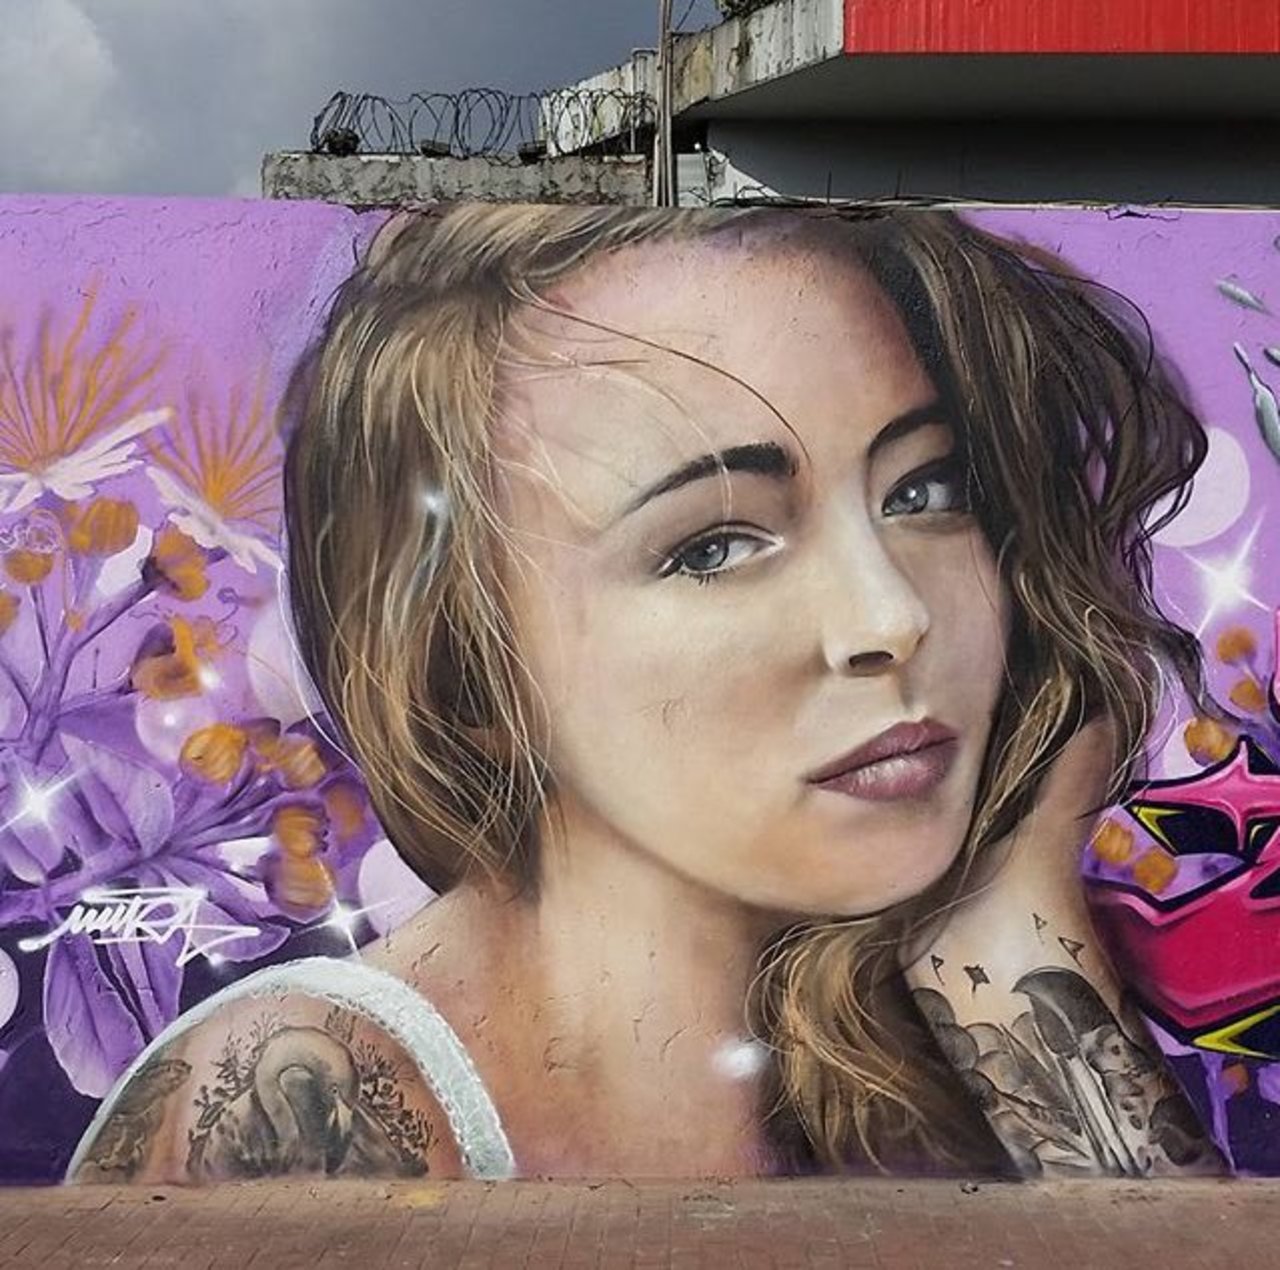 New Street Art by Mantarea 

#art #graffiti #mural #streetart https://t.co/pfB5wchsV5